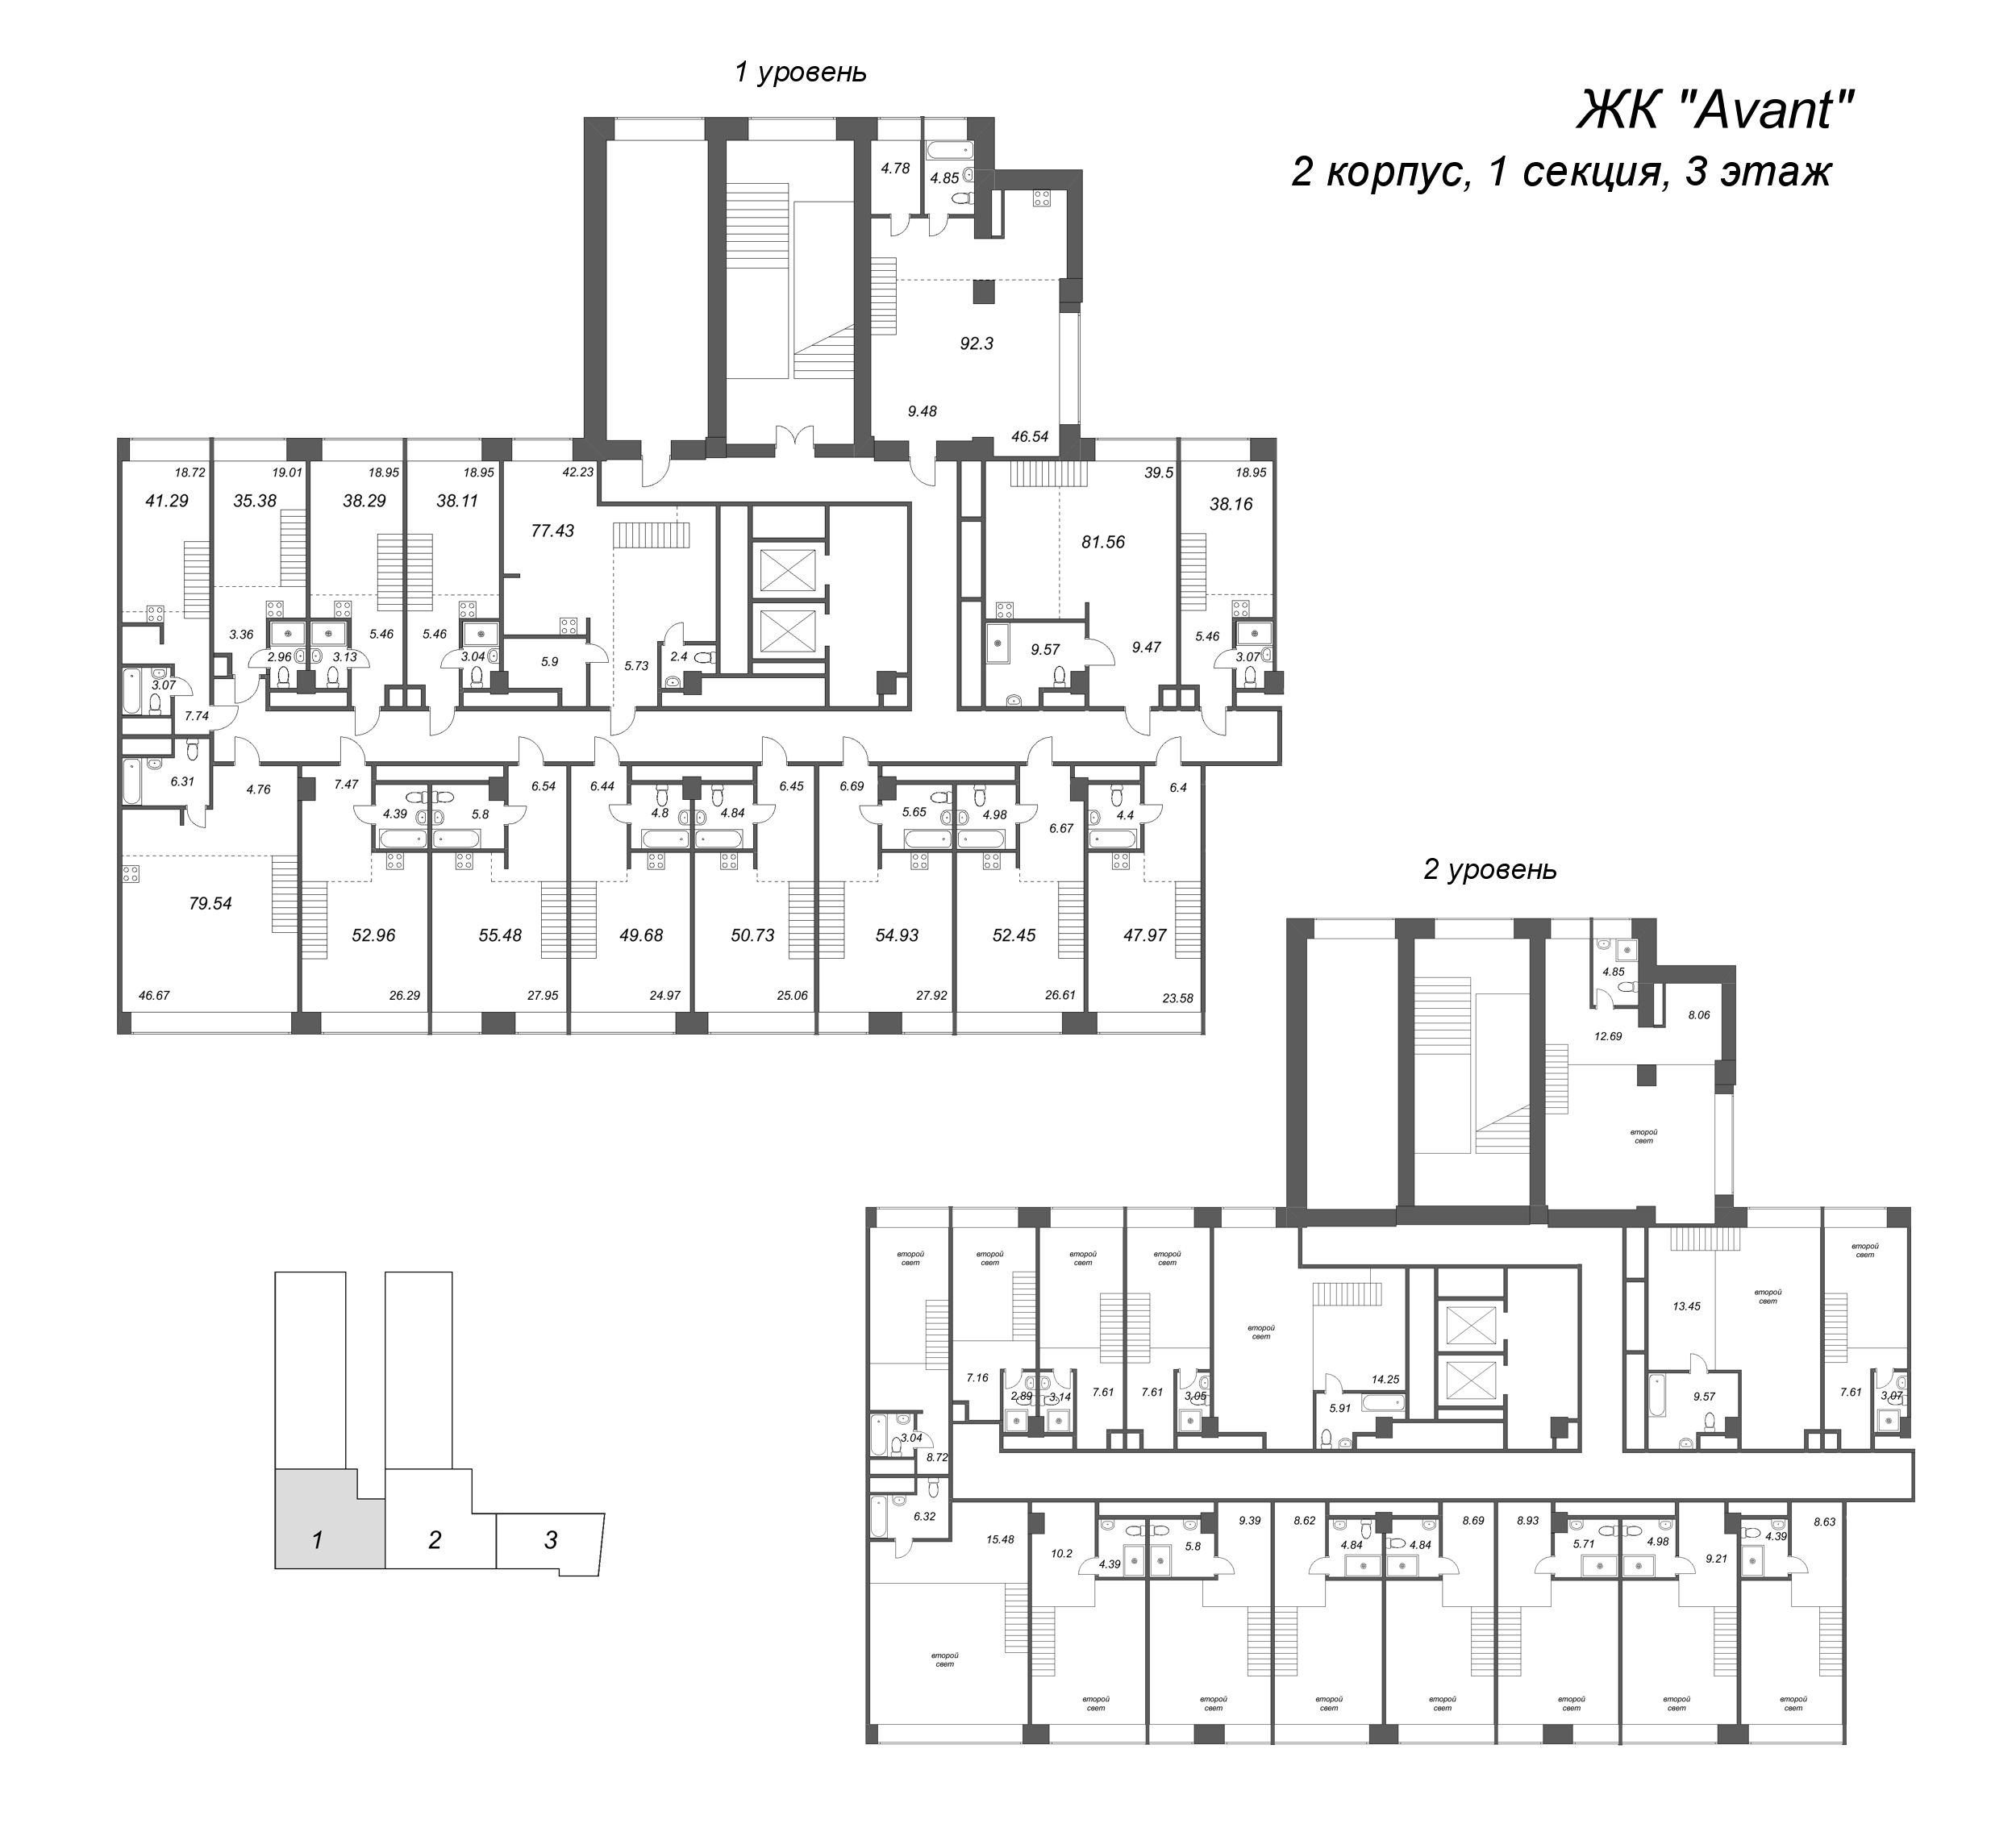 2-комнатная (Евро) квартира, 41.29 м² - планировка этажа